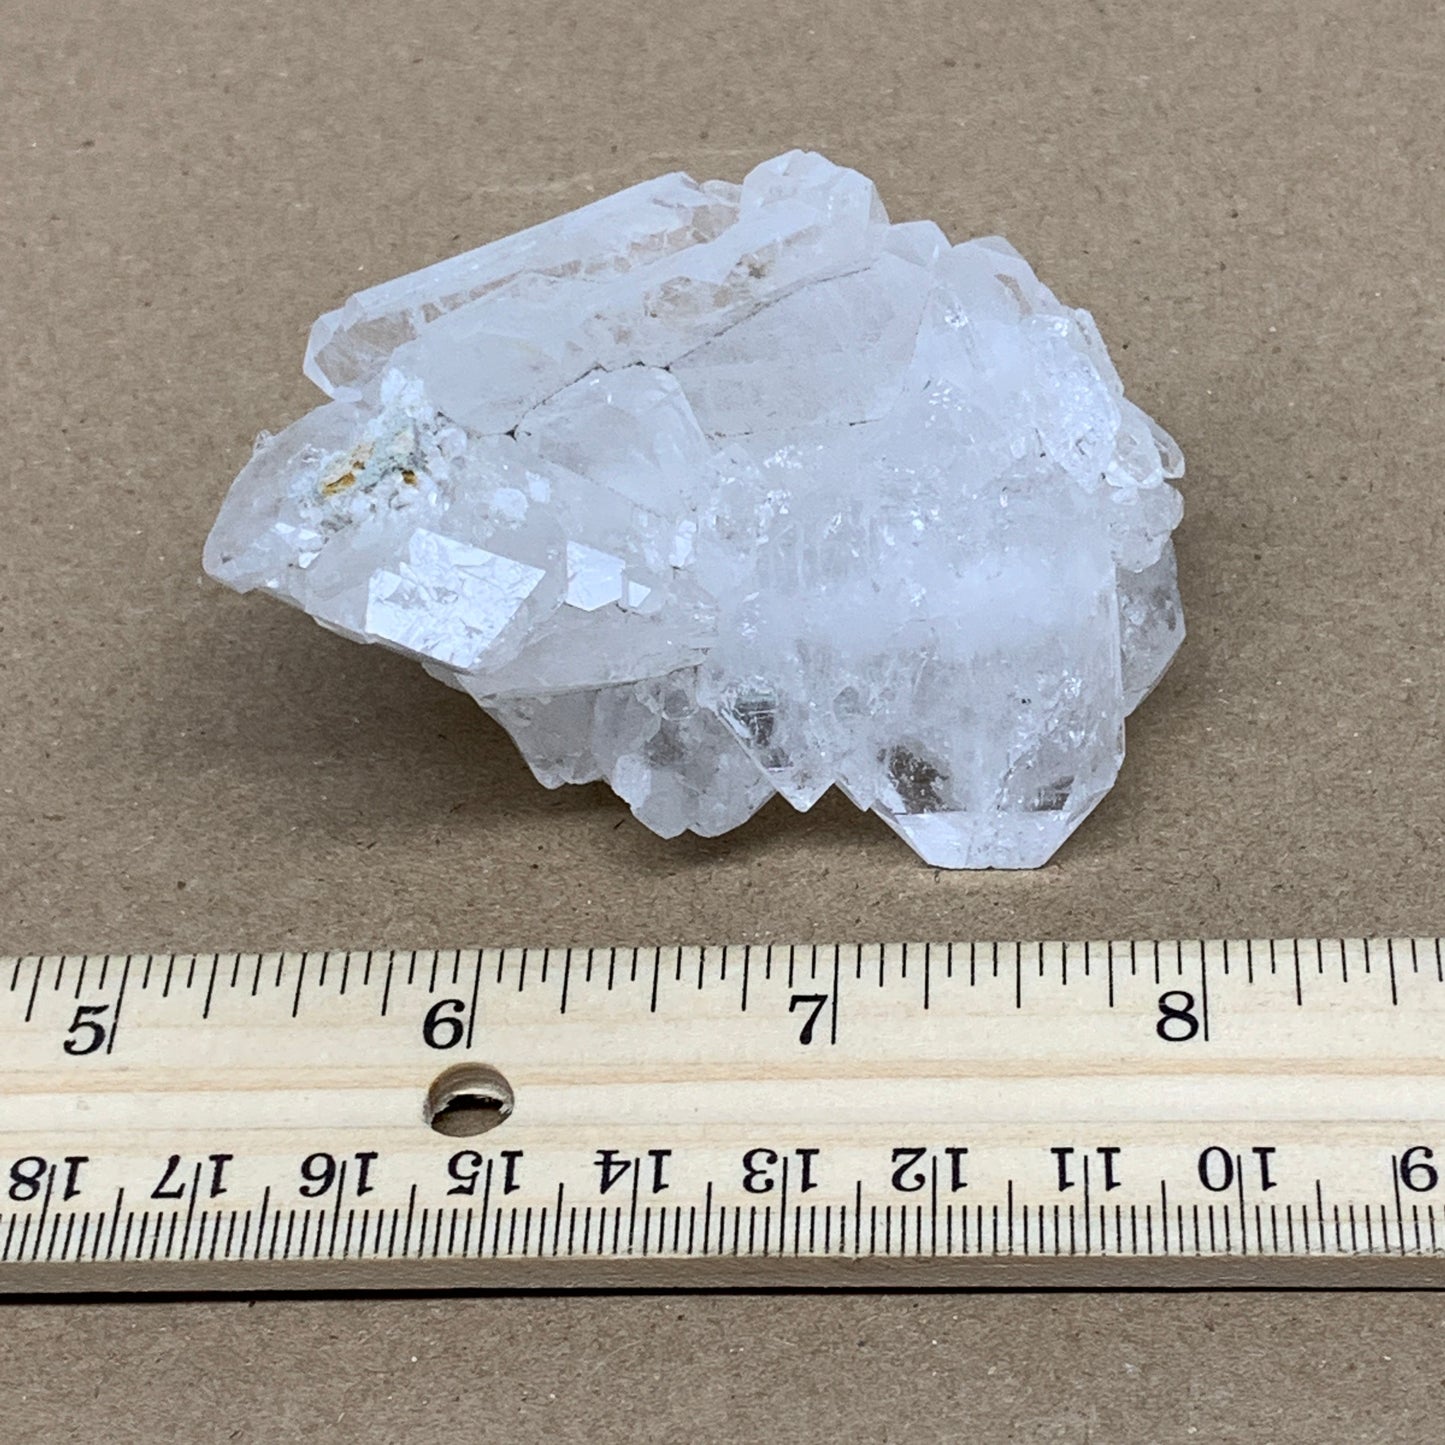 108.2g, 2.9"x2.1"x1.6", Faden Quartz Crystal Mineral,Specimen Terminated, B24948